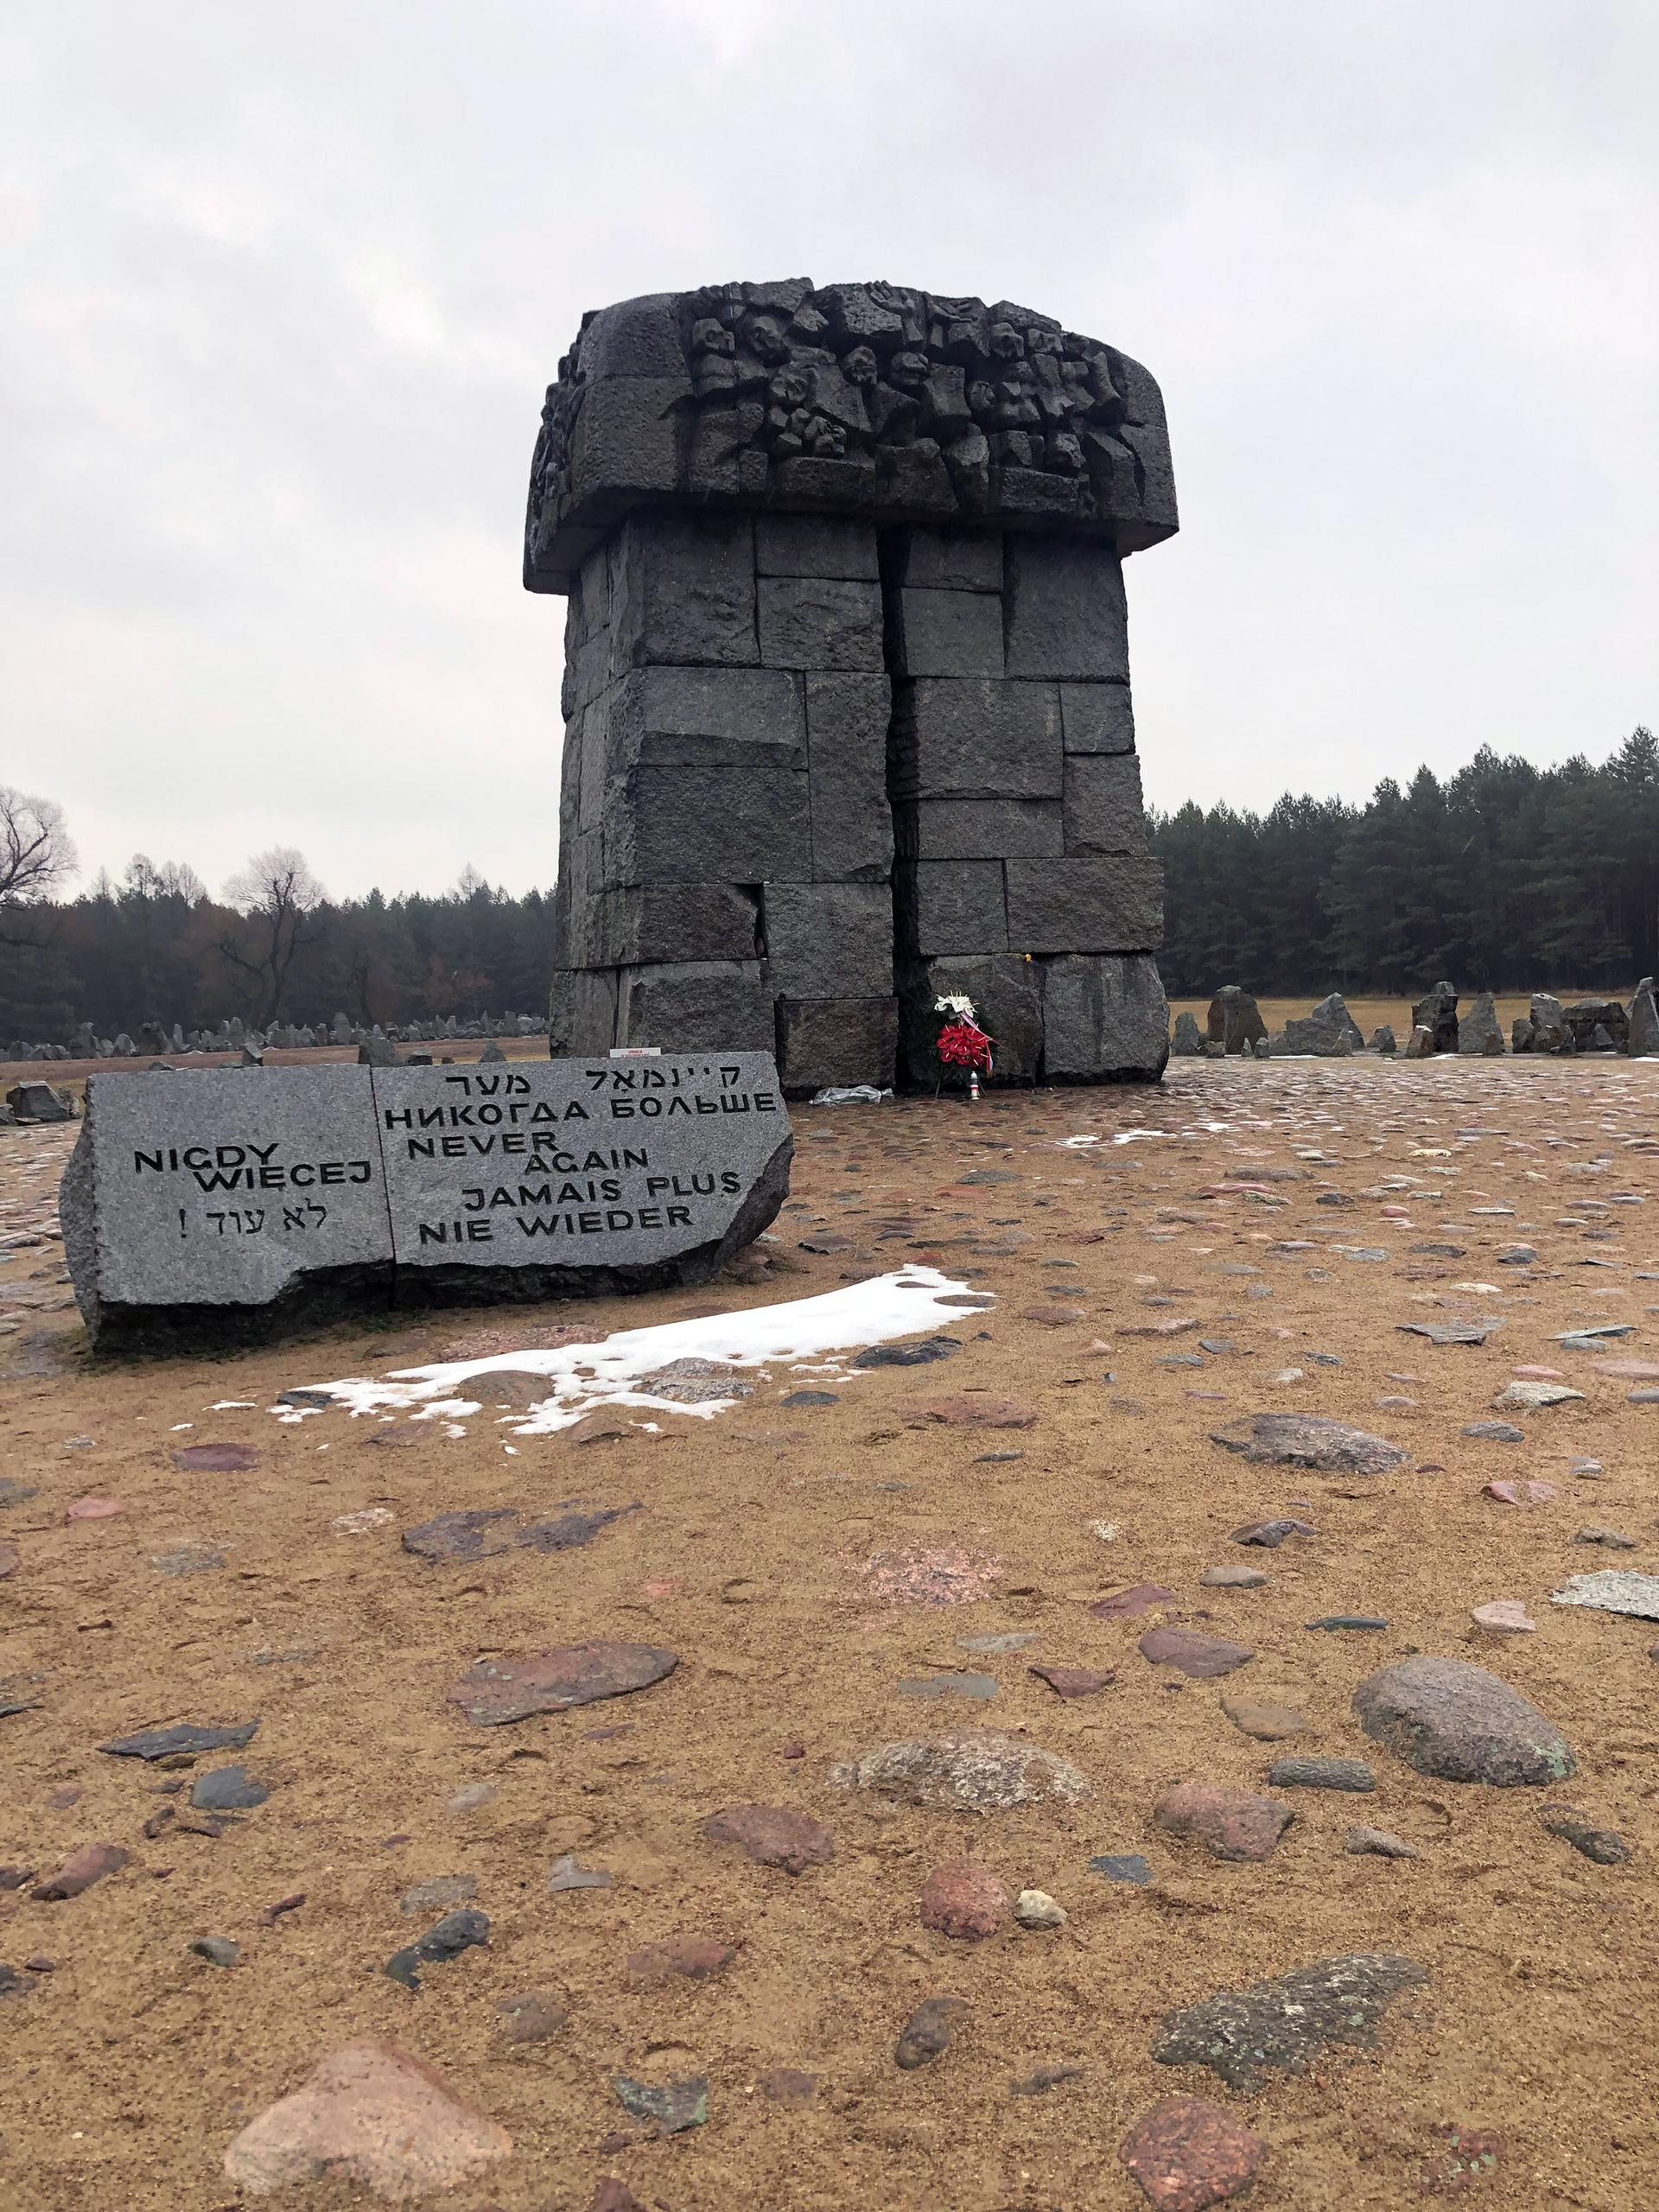 A monument at Treblinka reads 